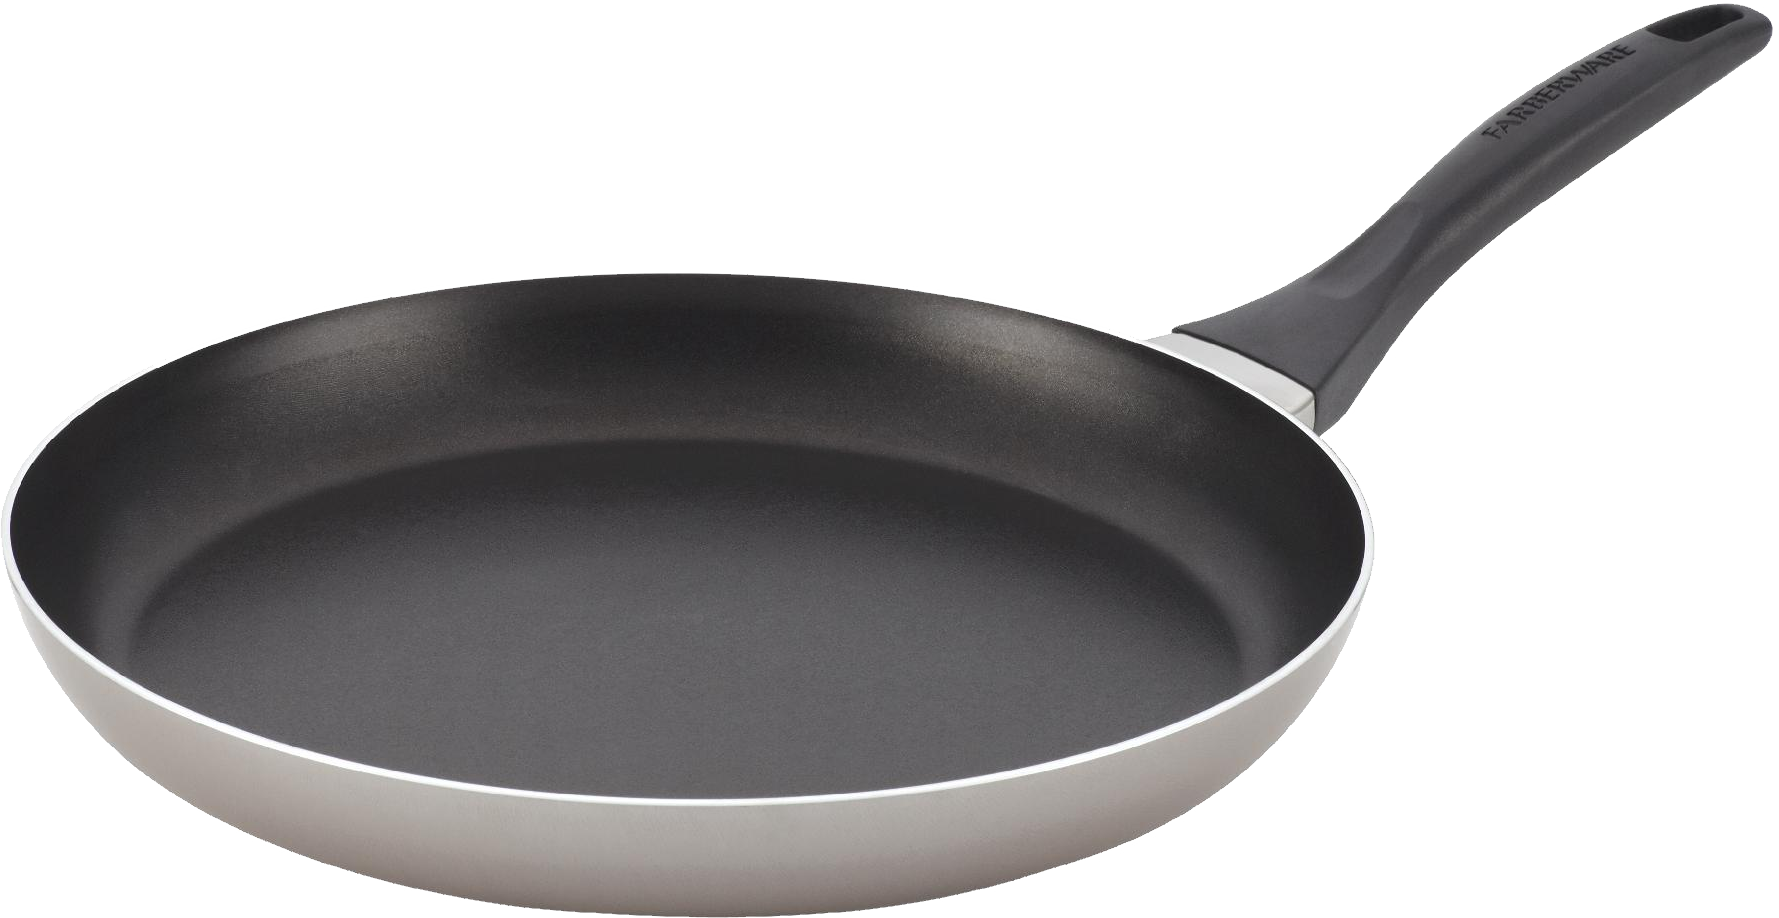 Frying Pan PNG - 8869